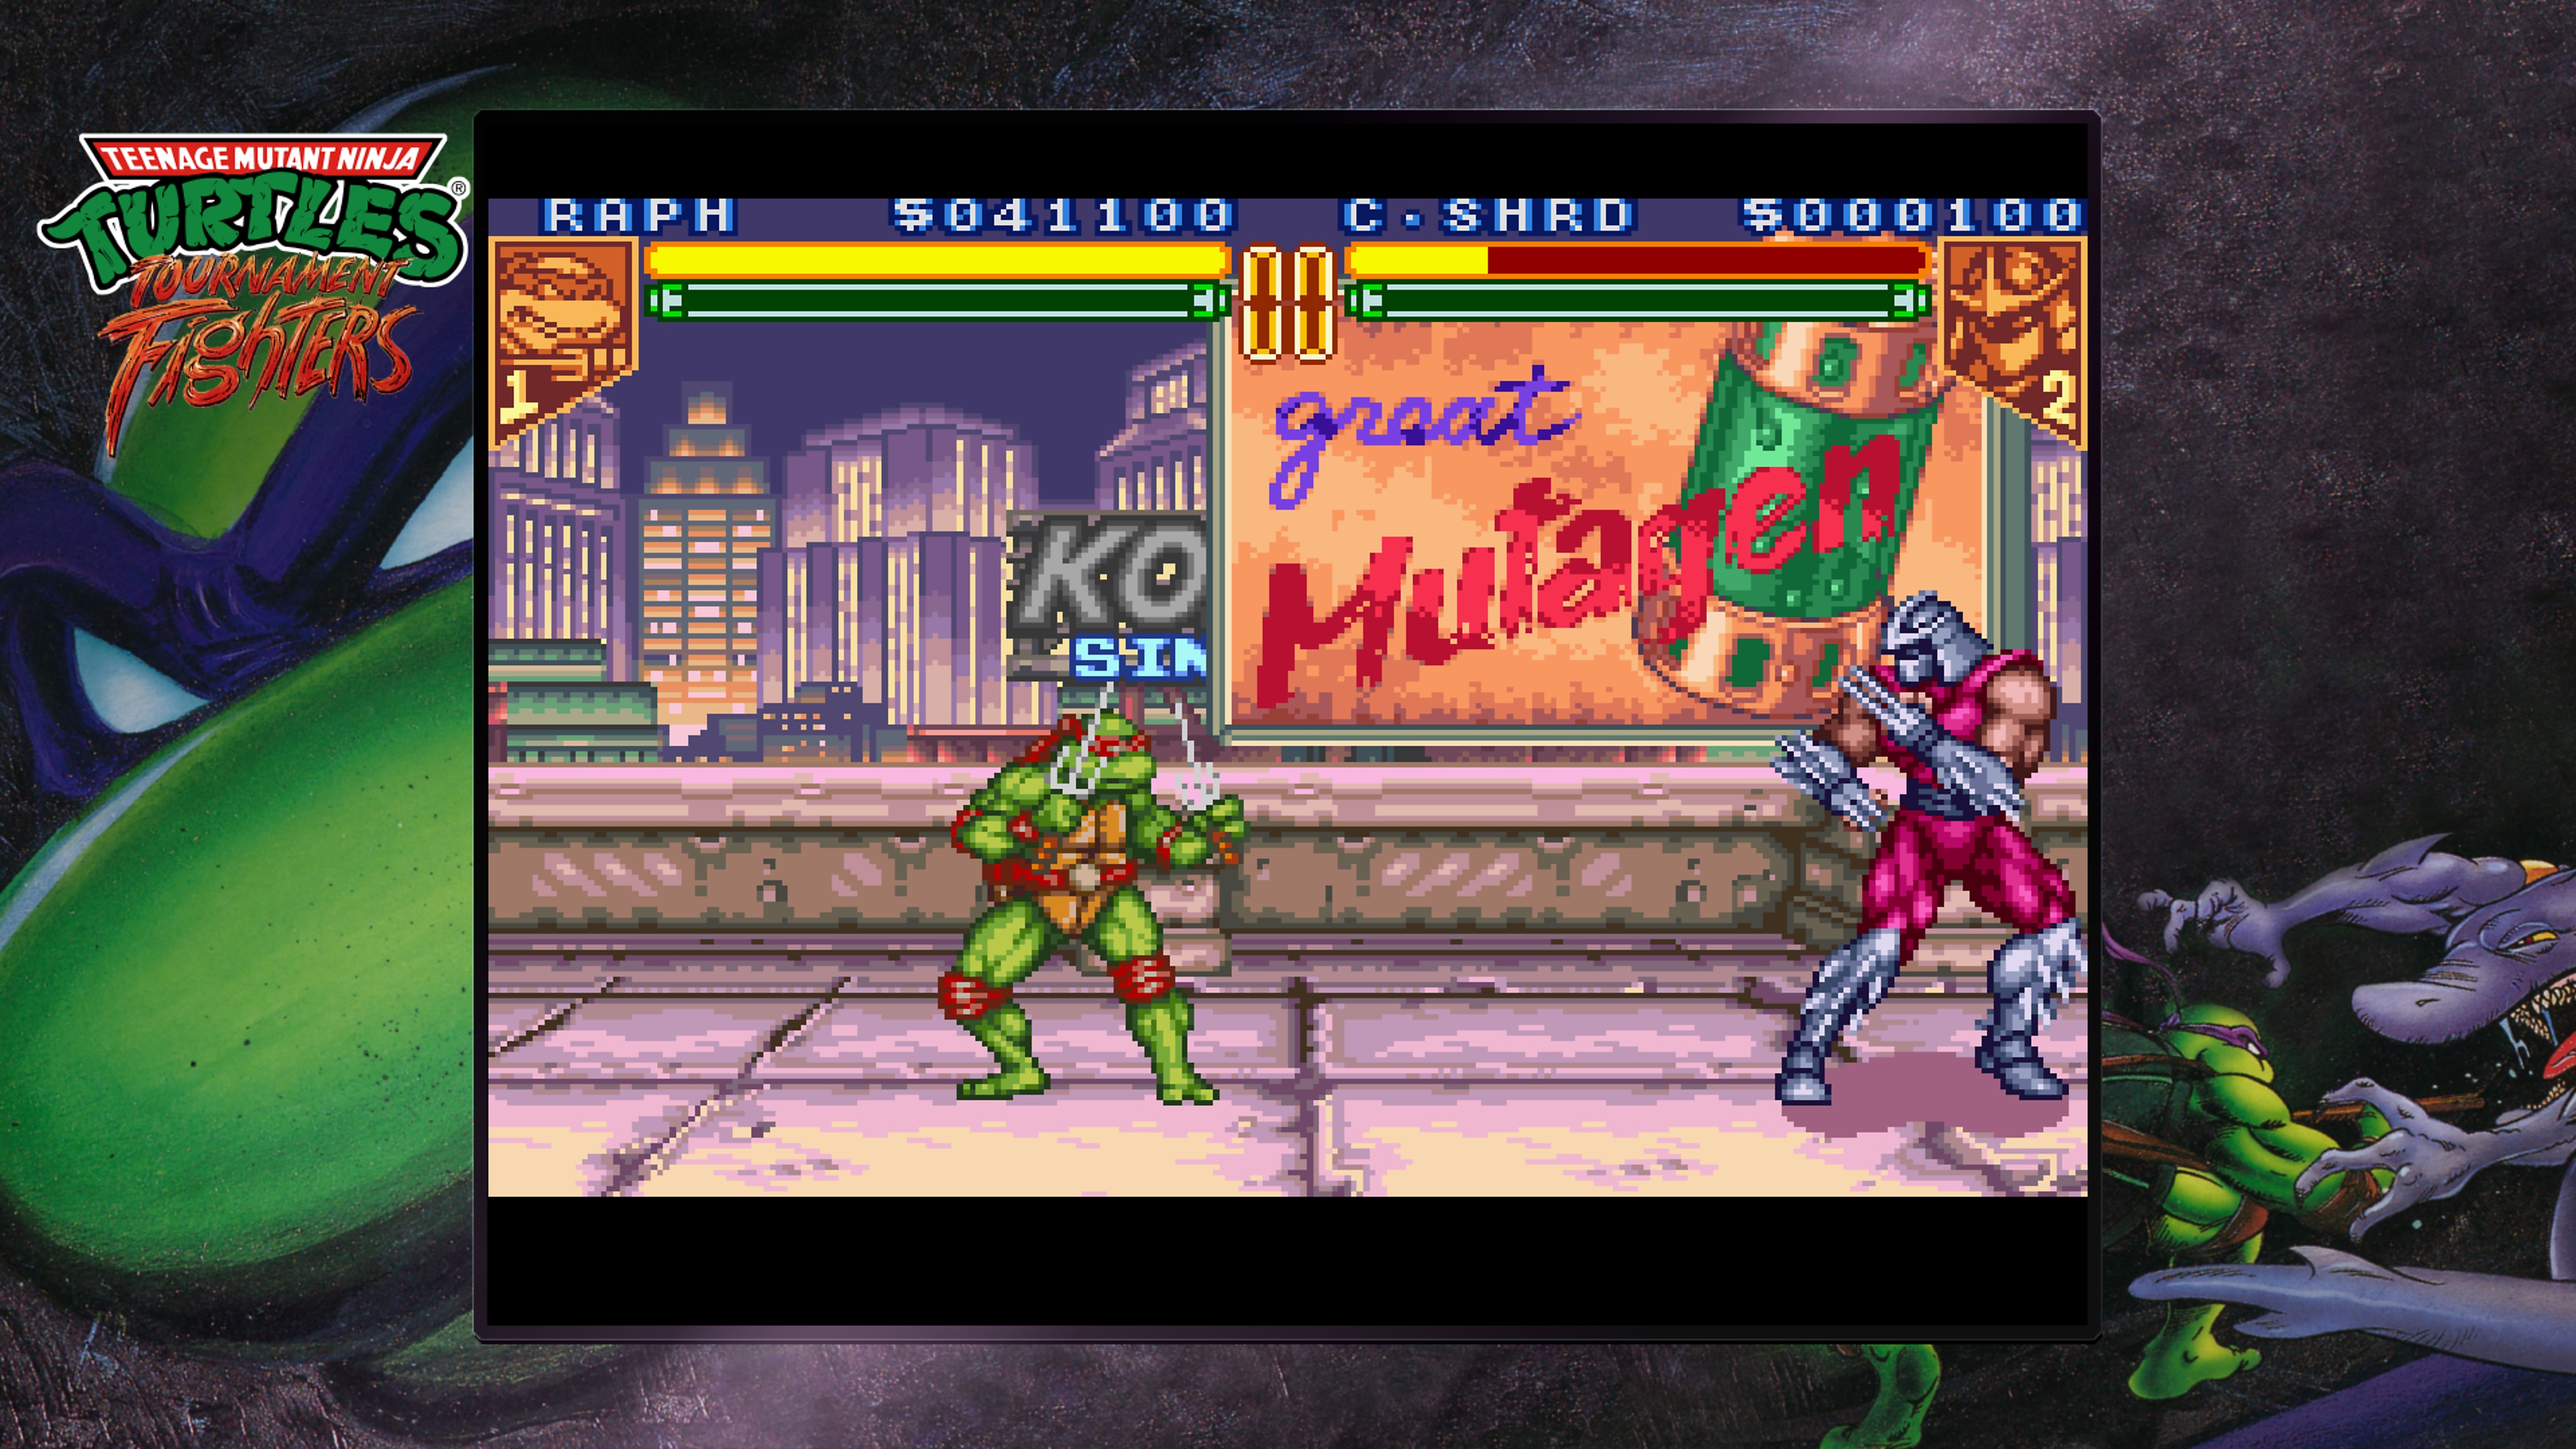 Kolekce Teenage Mutant Ninja Turtles – screenshot ze hry Tournament Fighters, kde bojuje Rafael s Trhačem na střeše